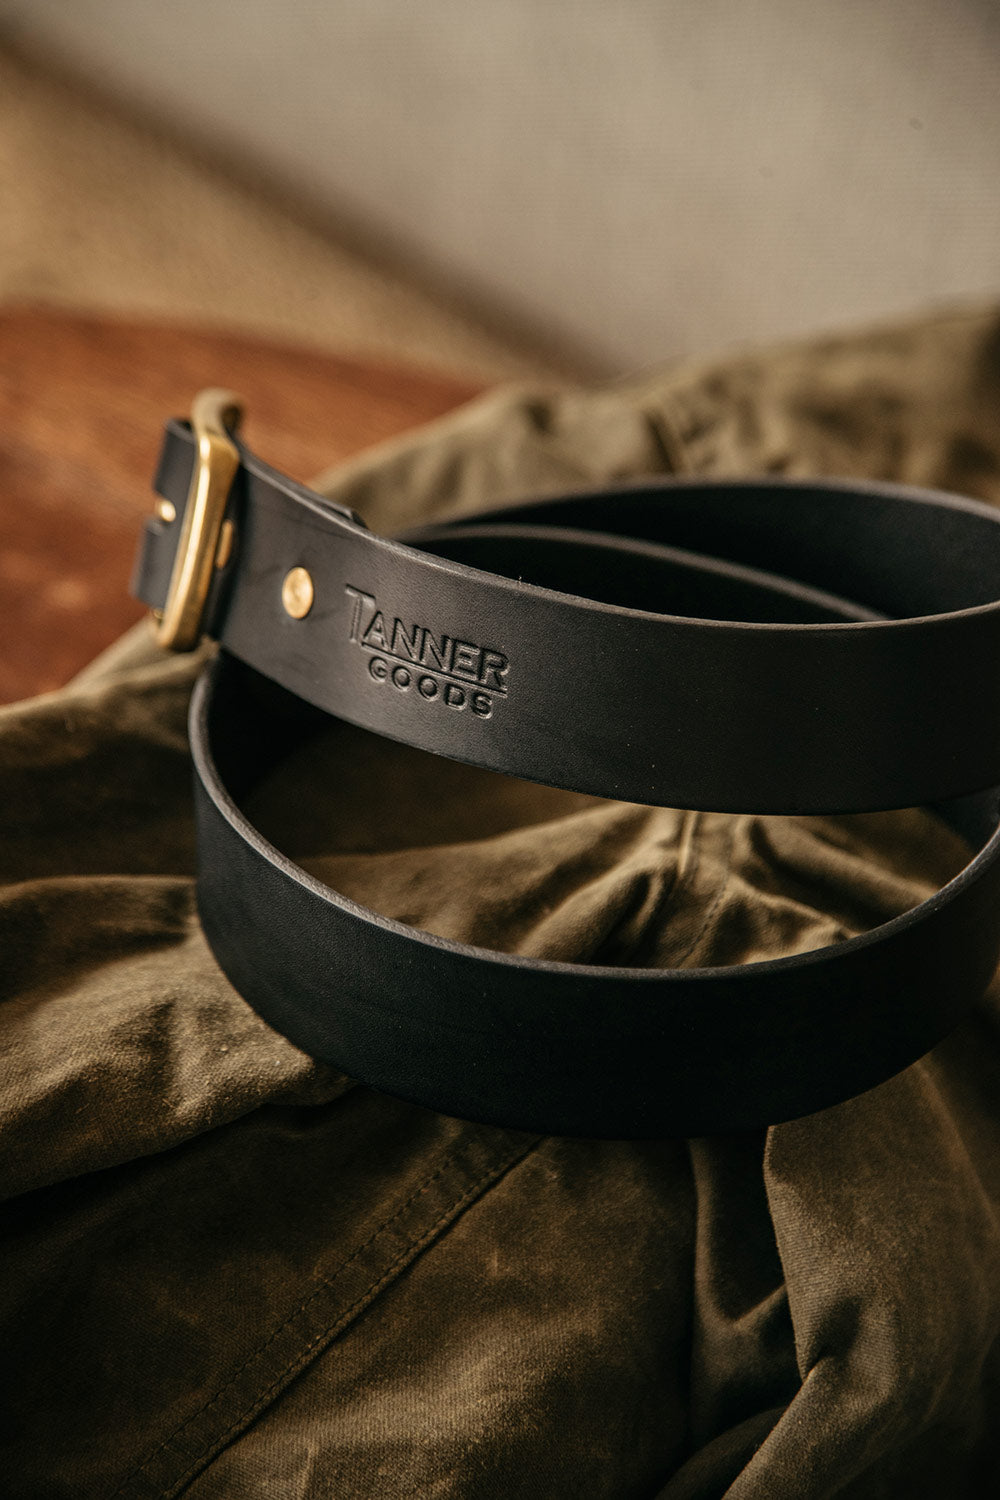 Goods USA Black the - in | | Made Tanner Belt Standard